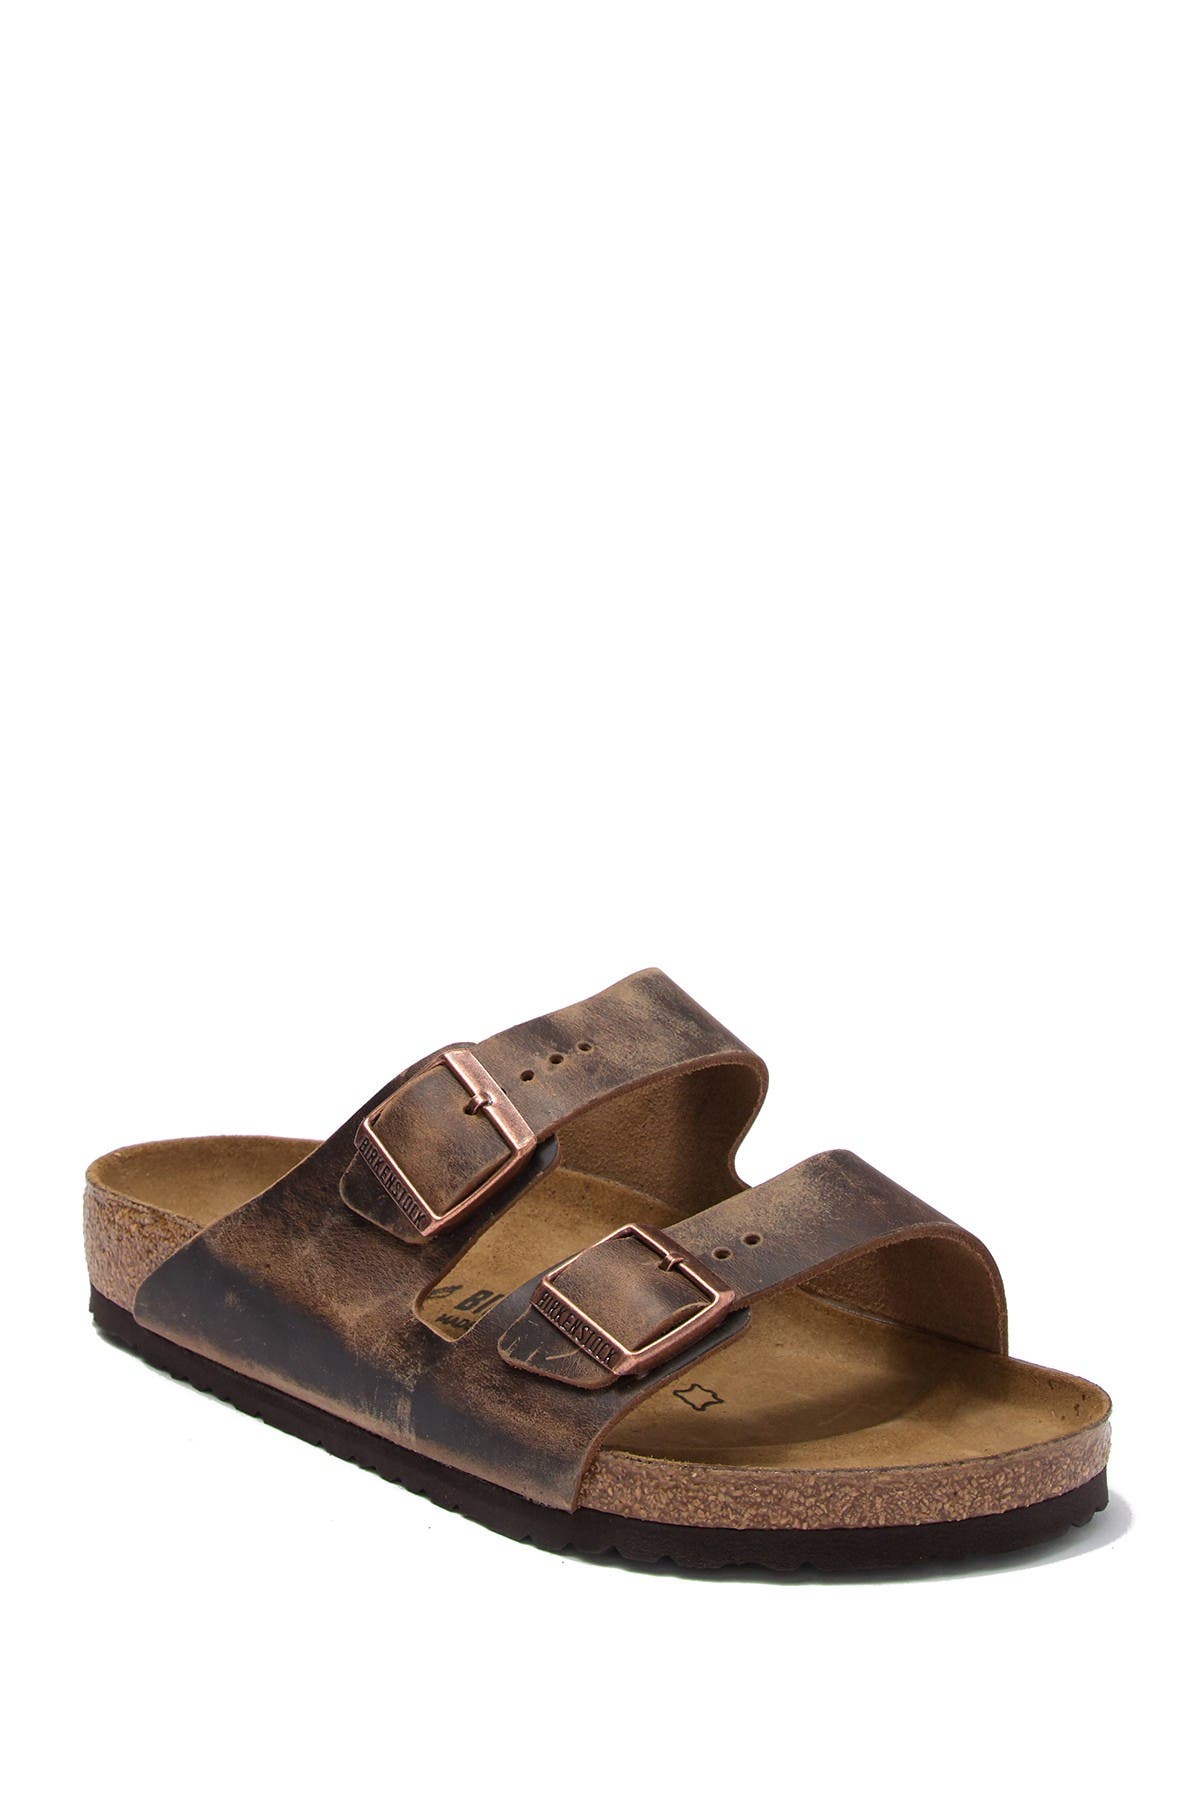 Birkenstock | Arizona Leather Sandal 